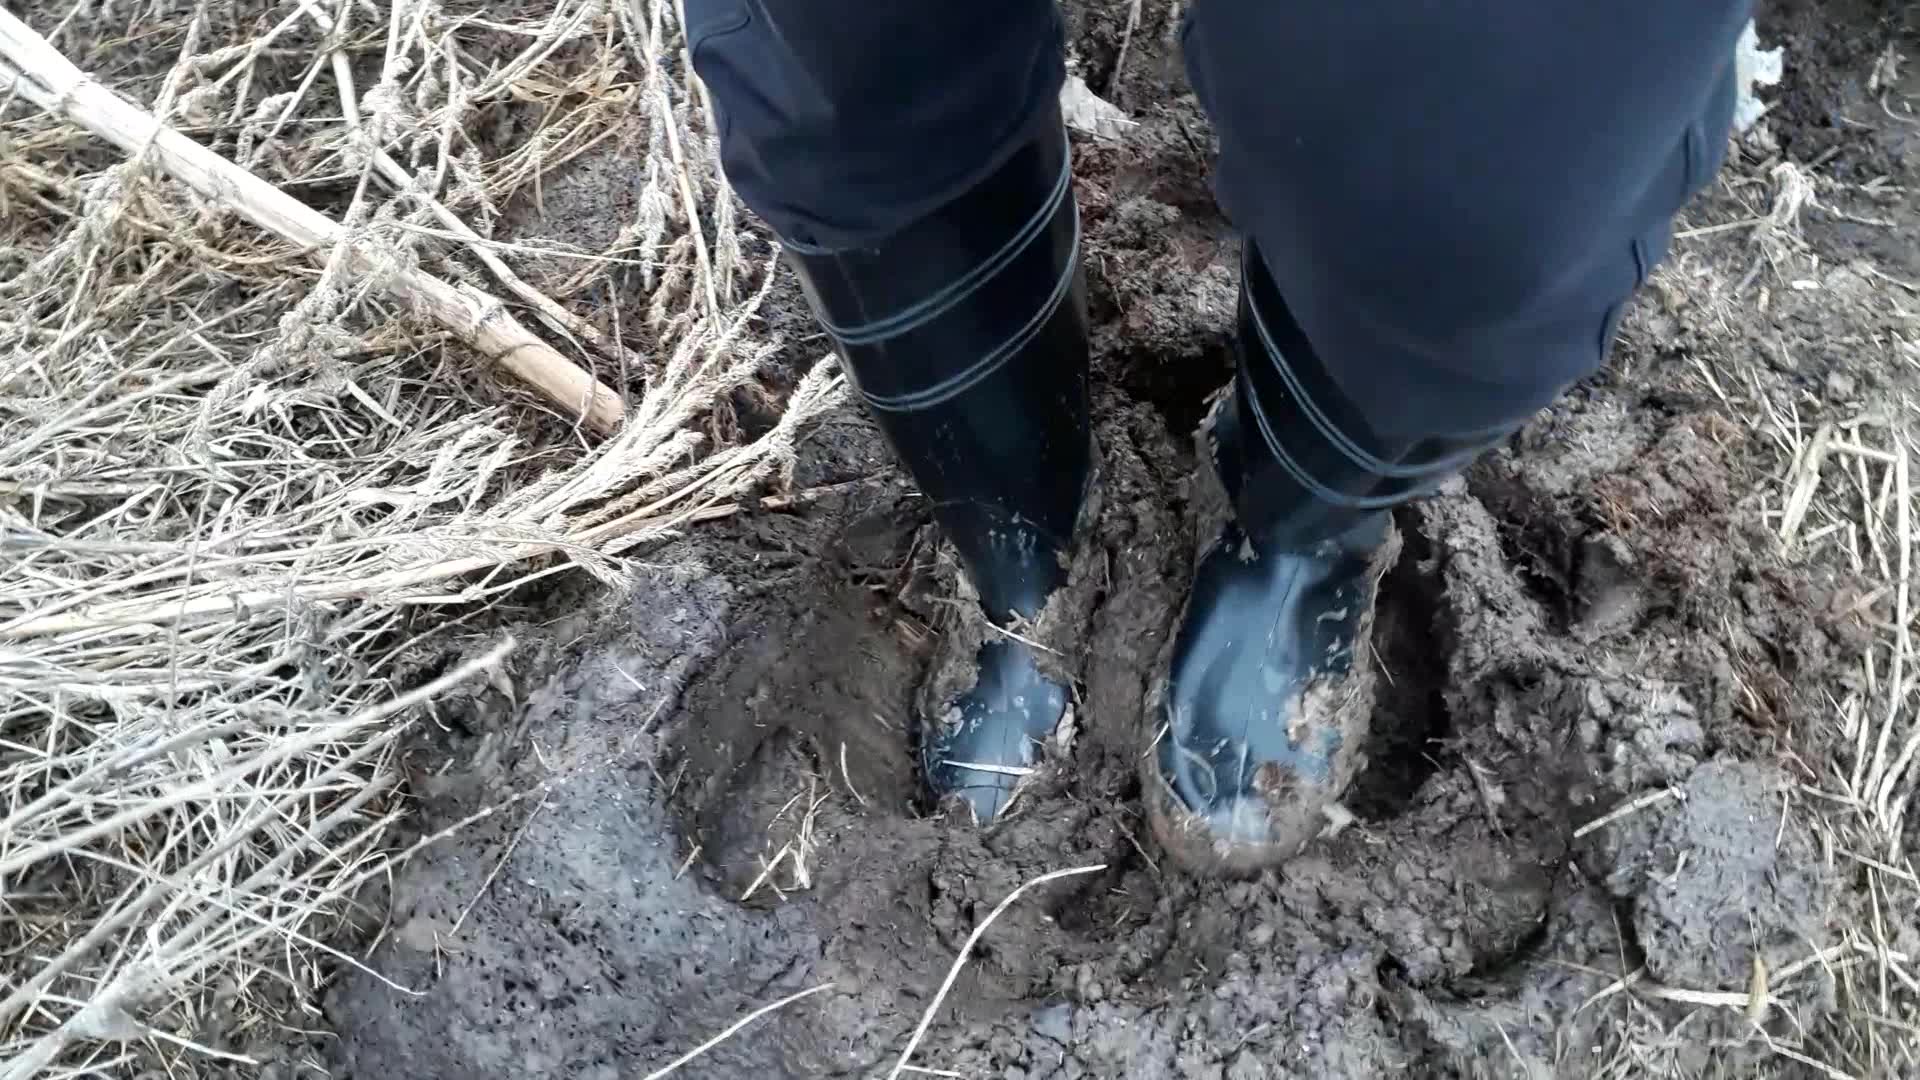 Rubber boots vs manure